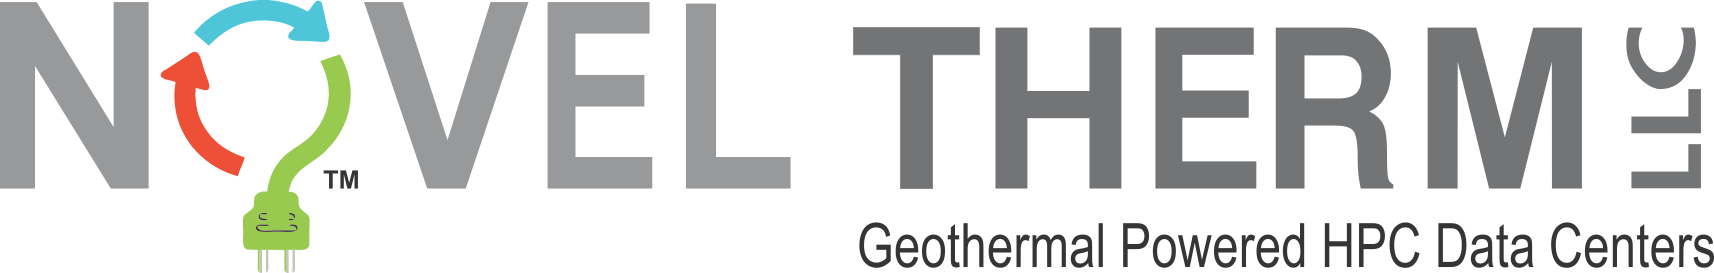 Image of Noveltherm LLC logo, Geothermal powered HPC data centers